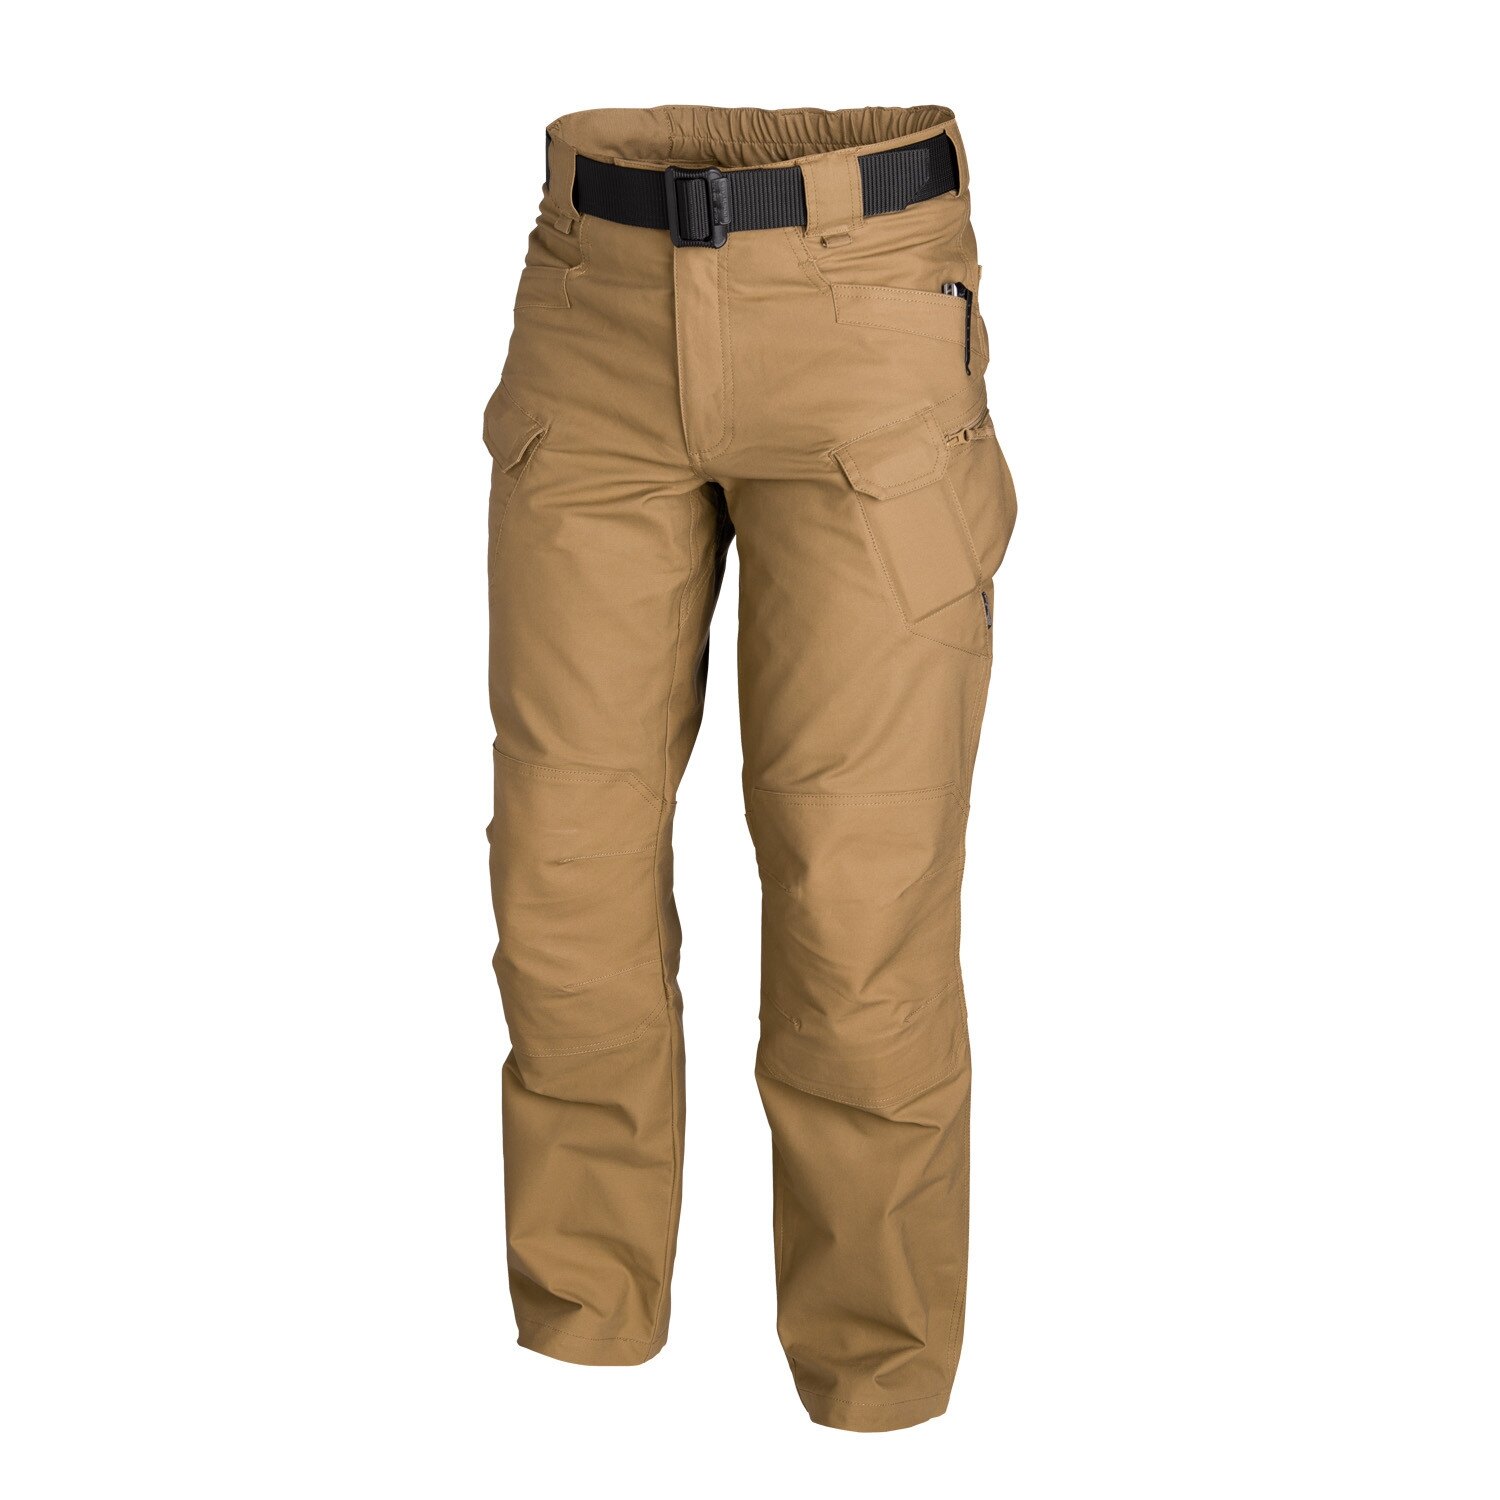 Kalhoty Helikon-Tex® UTP® GEN III Ripstop – Černá